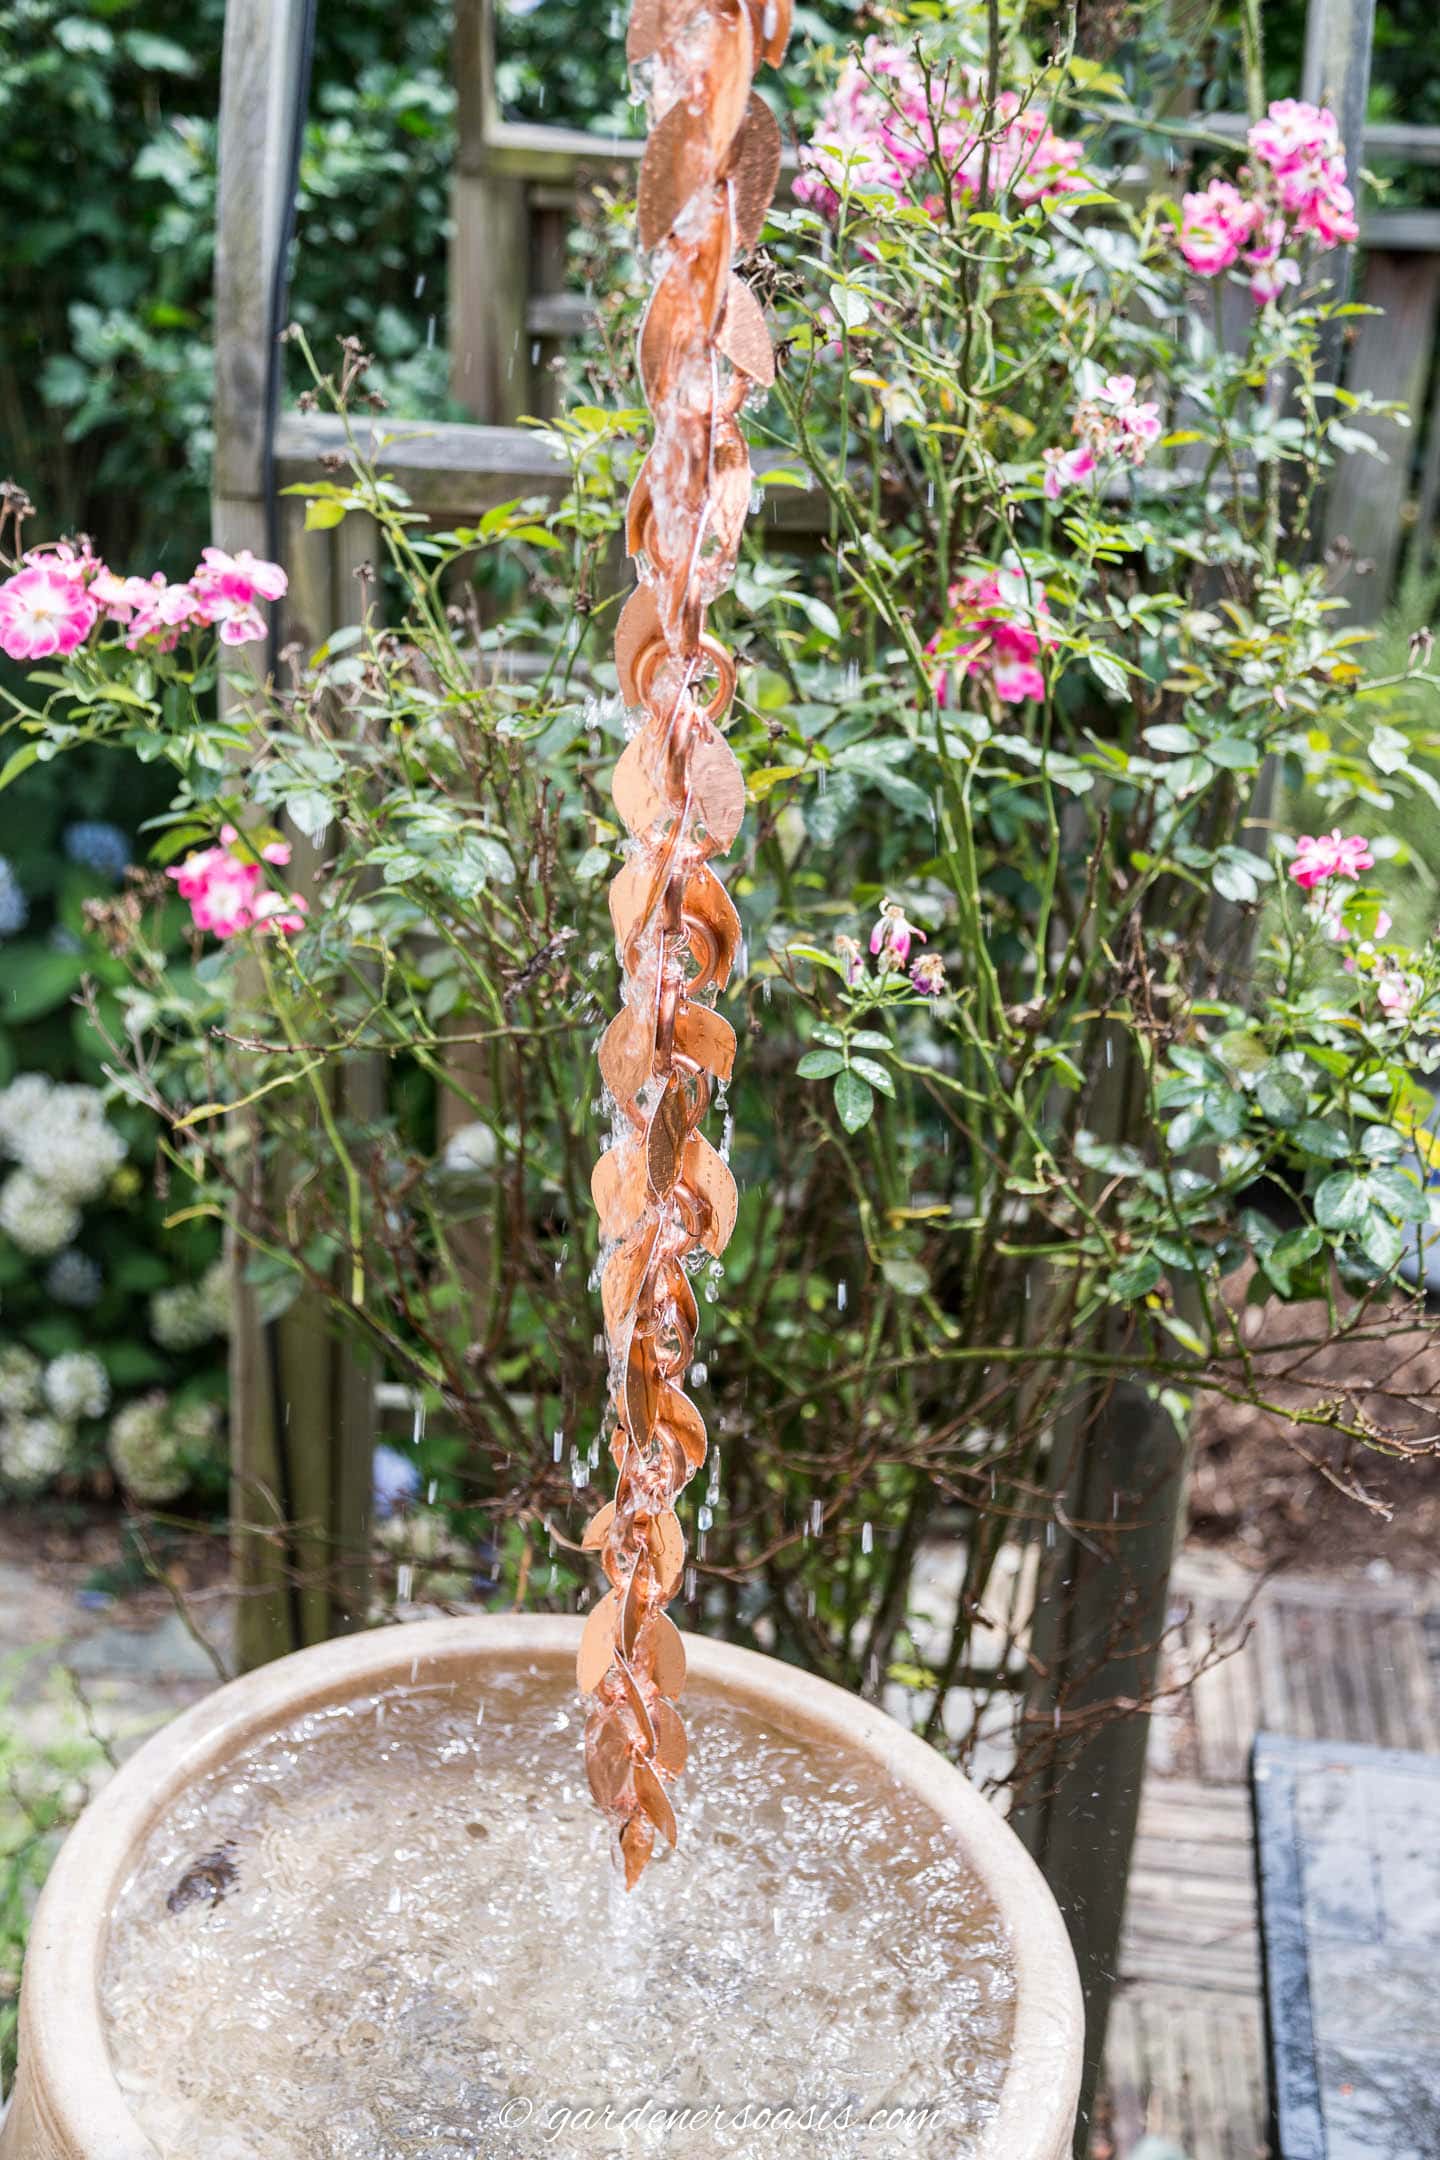 The installed DIY copper leaf rain chain hanging above a rain barrel